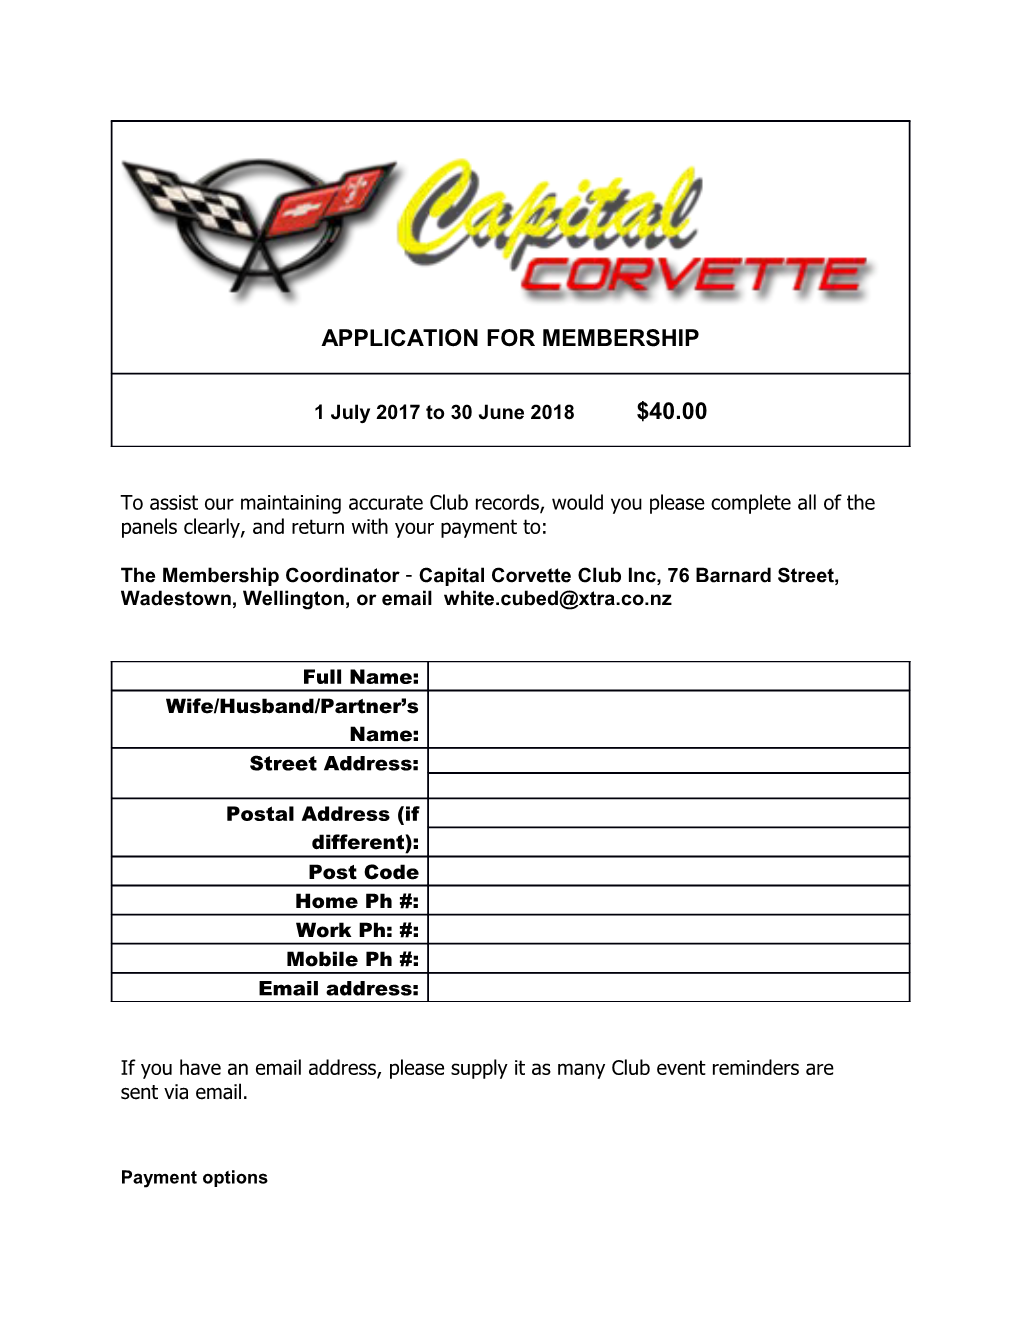 The Membership Coordinator - Capital Corvette Club Inc, 76 Barnard Street, Wadestown